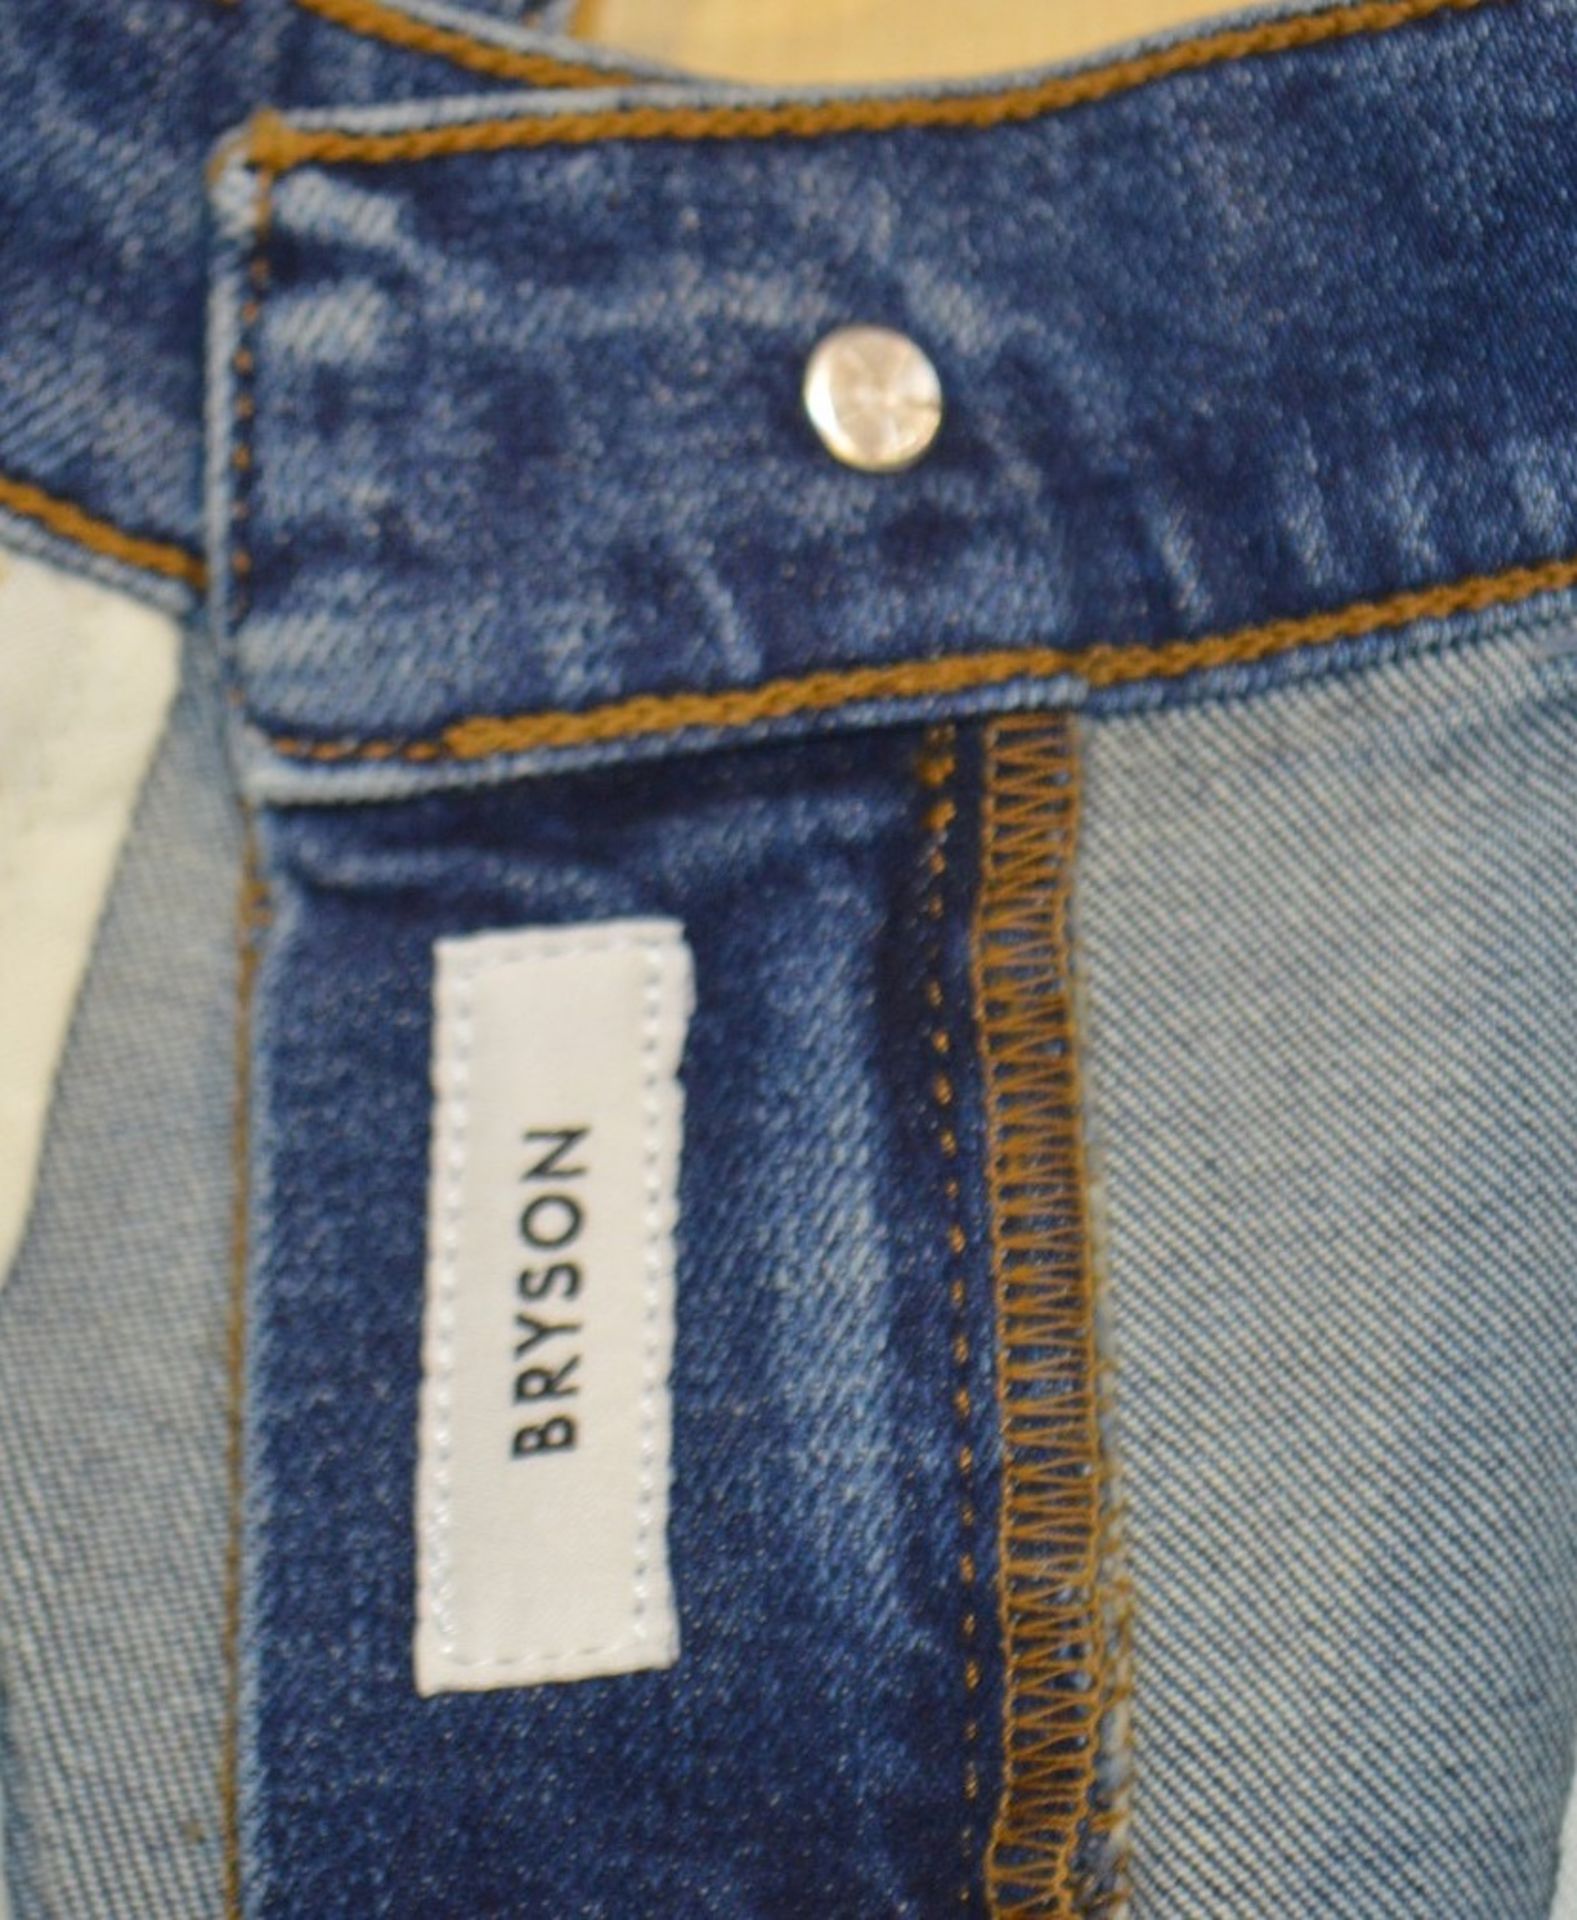 1 x Pair Of Men's Genuine Wrangler BRYSON Skinny Jeans In Blue - Size: UK 30/32 - Preowned, Like - Image 8 of 10